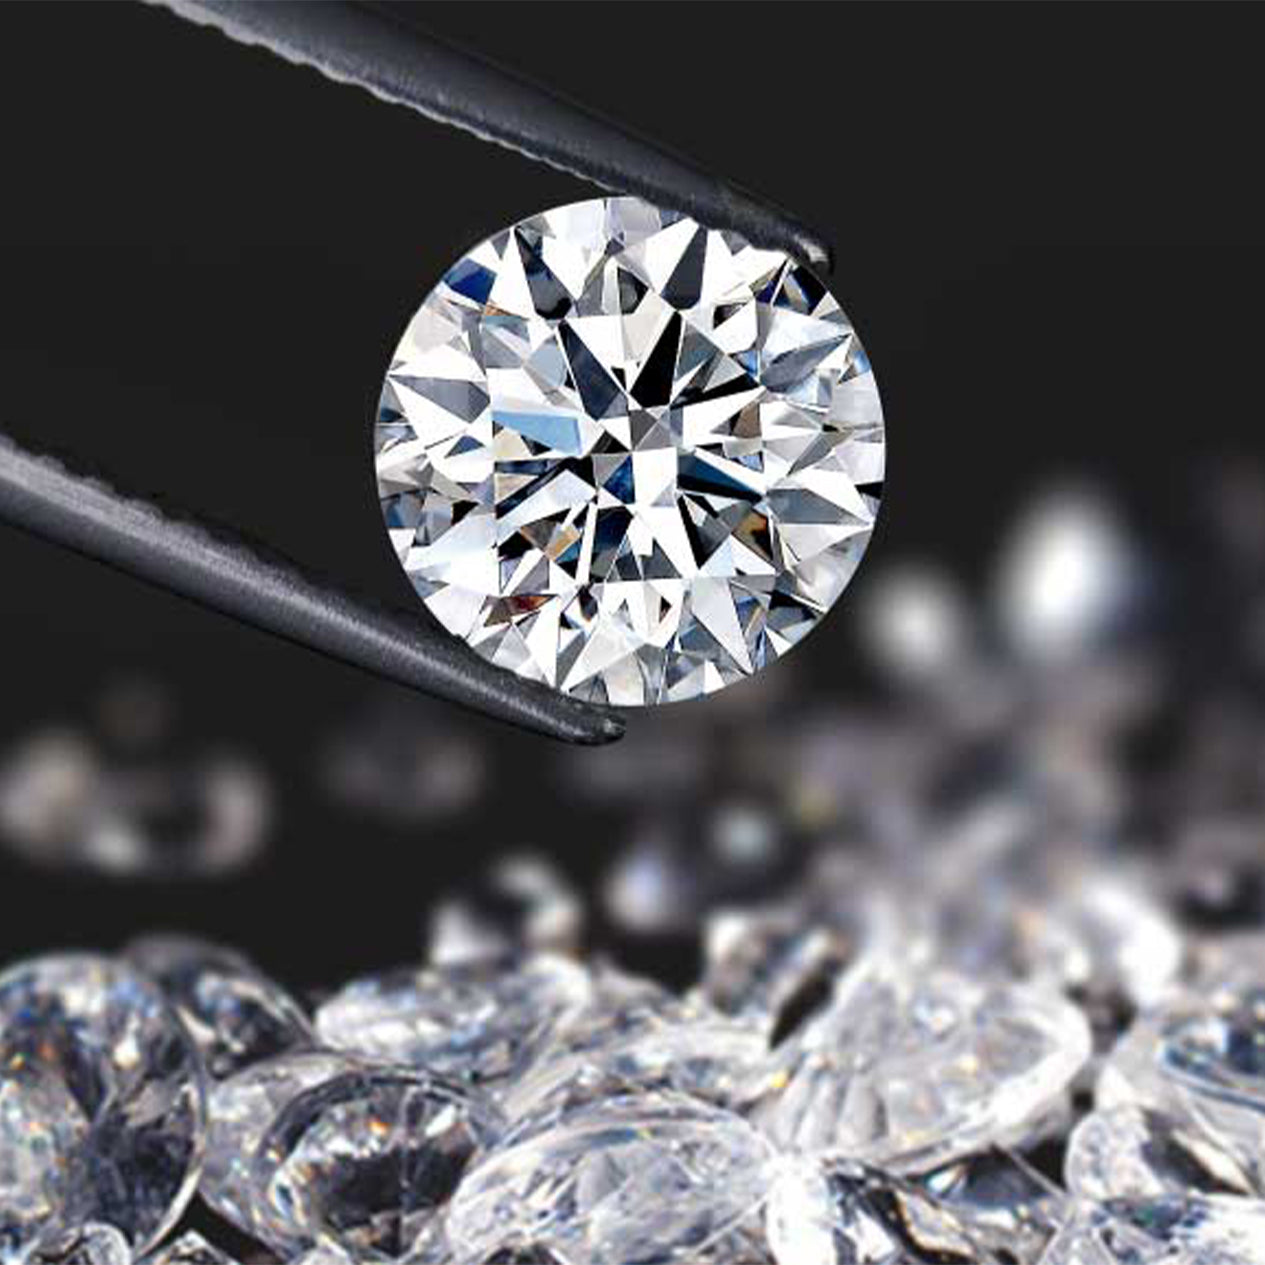 Shimansky picking up a cut diamond within loose diamonds